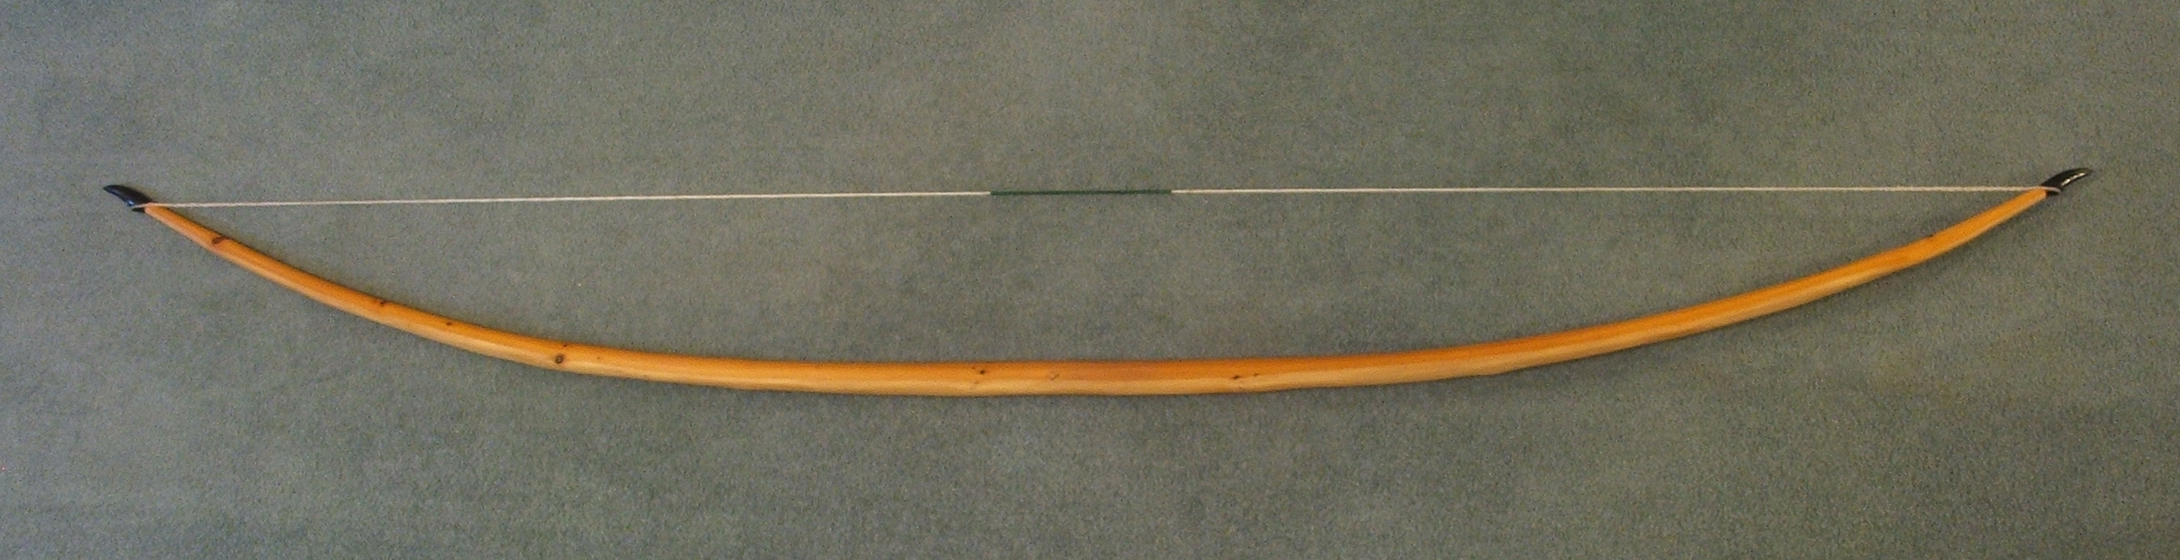 English Longbow, Wikimedia Commons